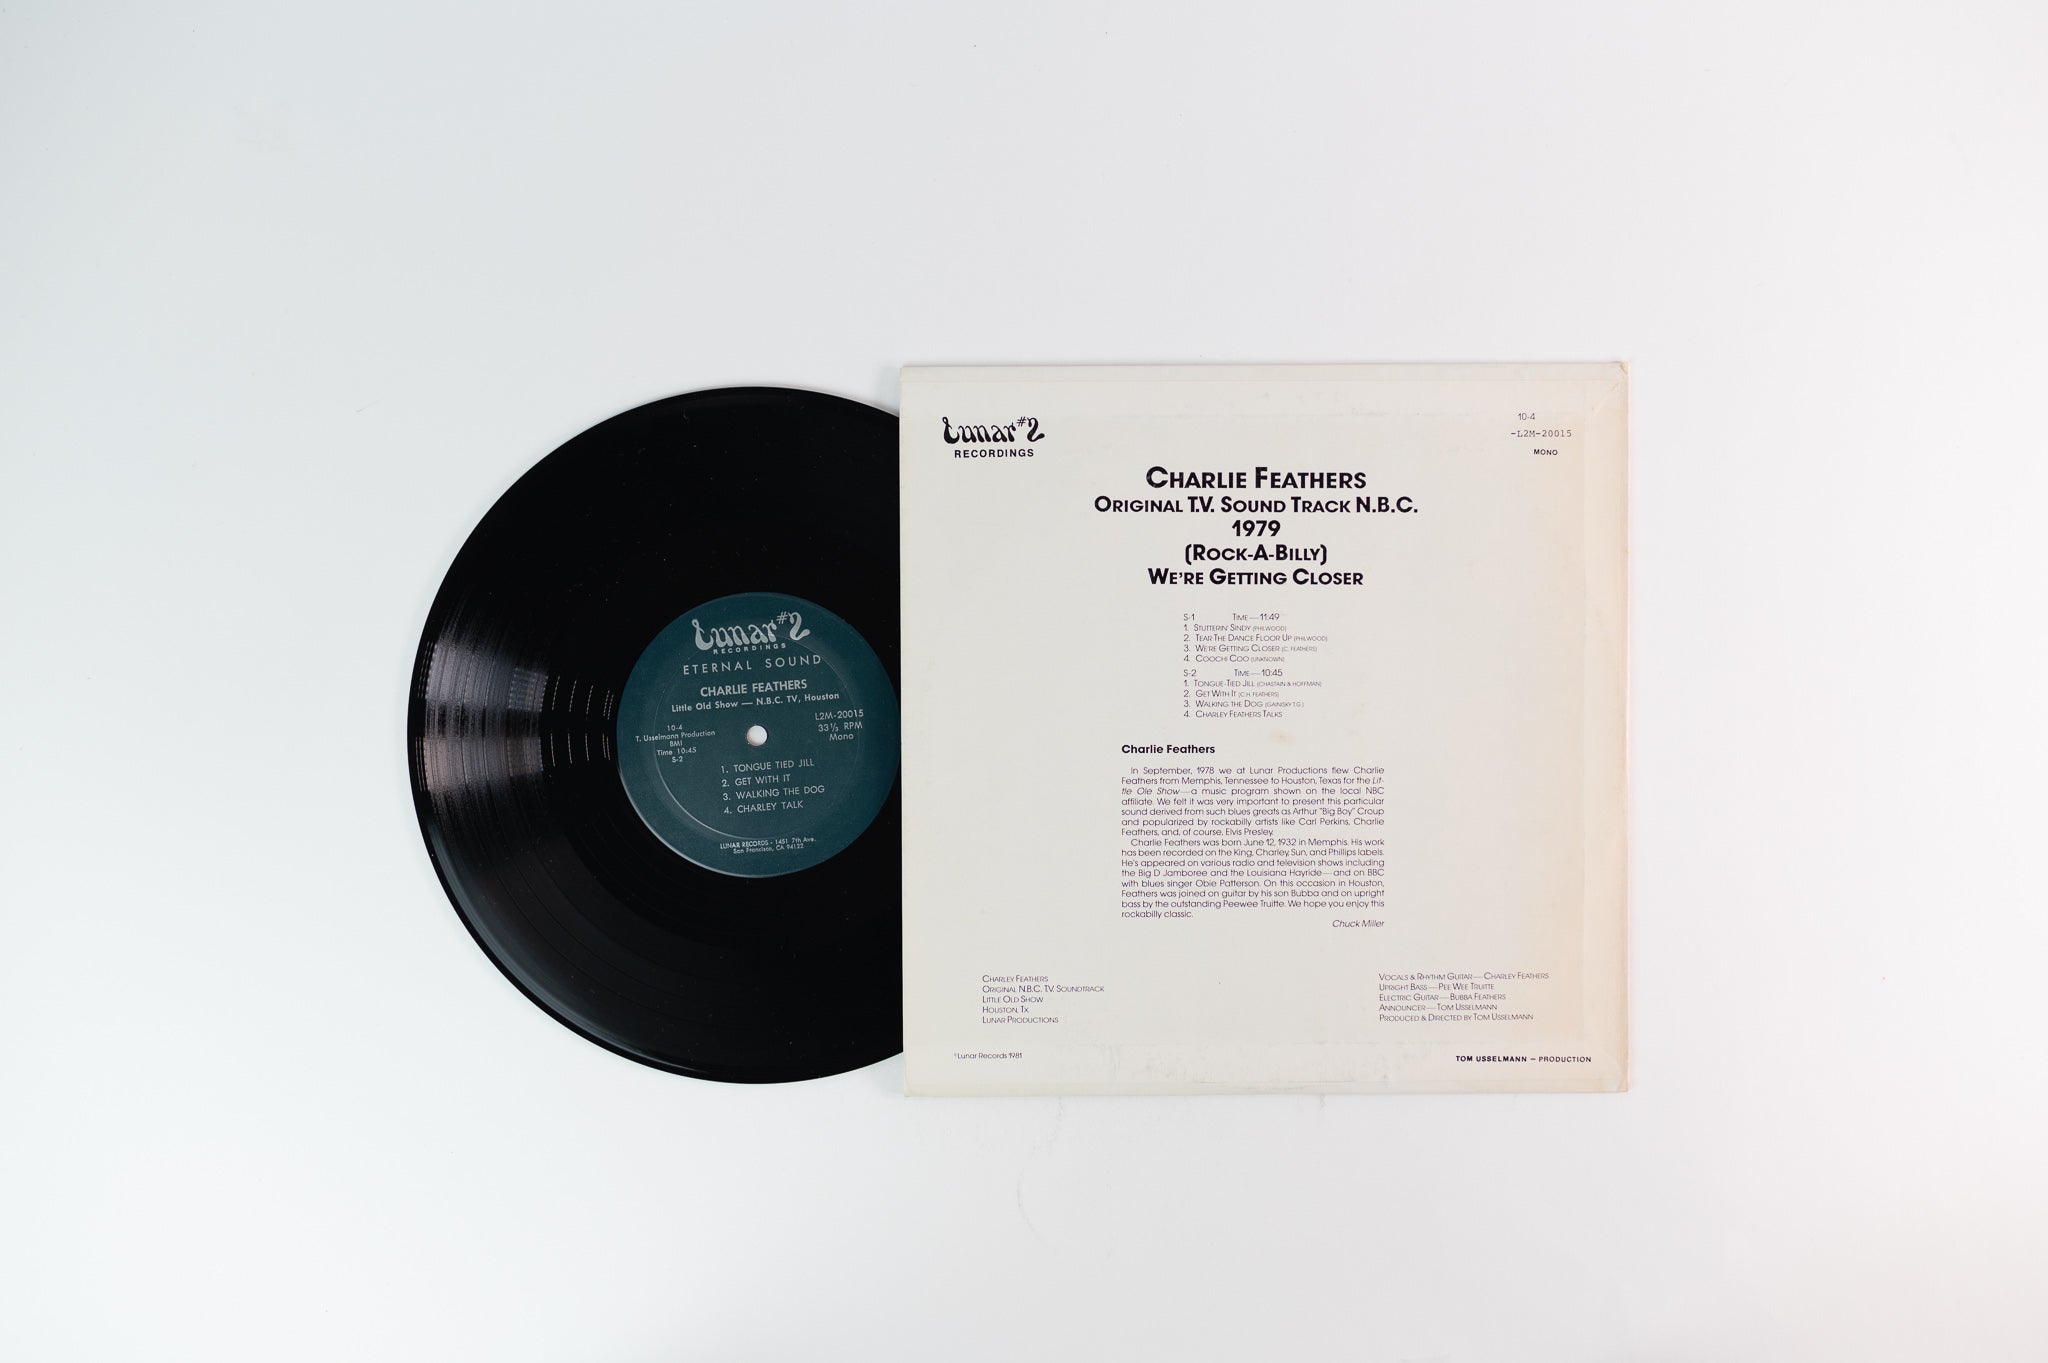 Charlie Feathers - Original TV Sound Track N.B.C 1979 (Rock-A-Billy) We're Getting Closer on Lunar 10"